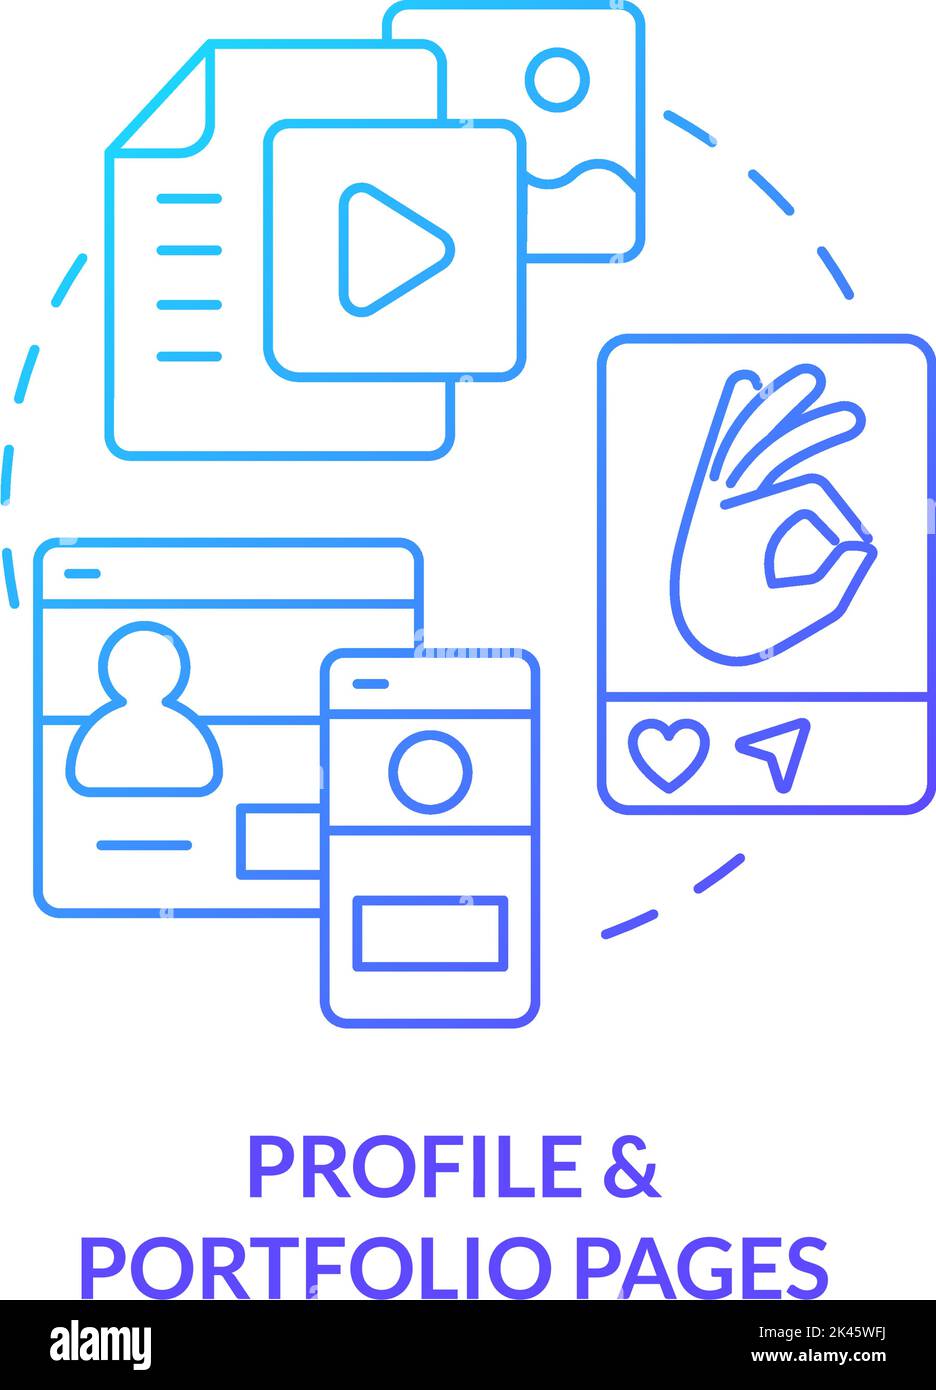 Profile and portfolio pages blue gradient concept icon Stock Vector